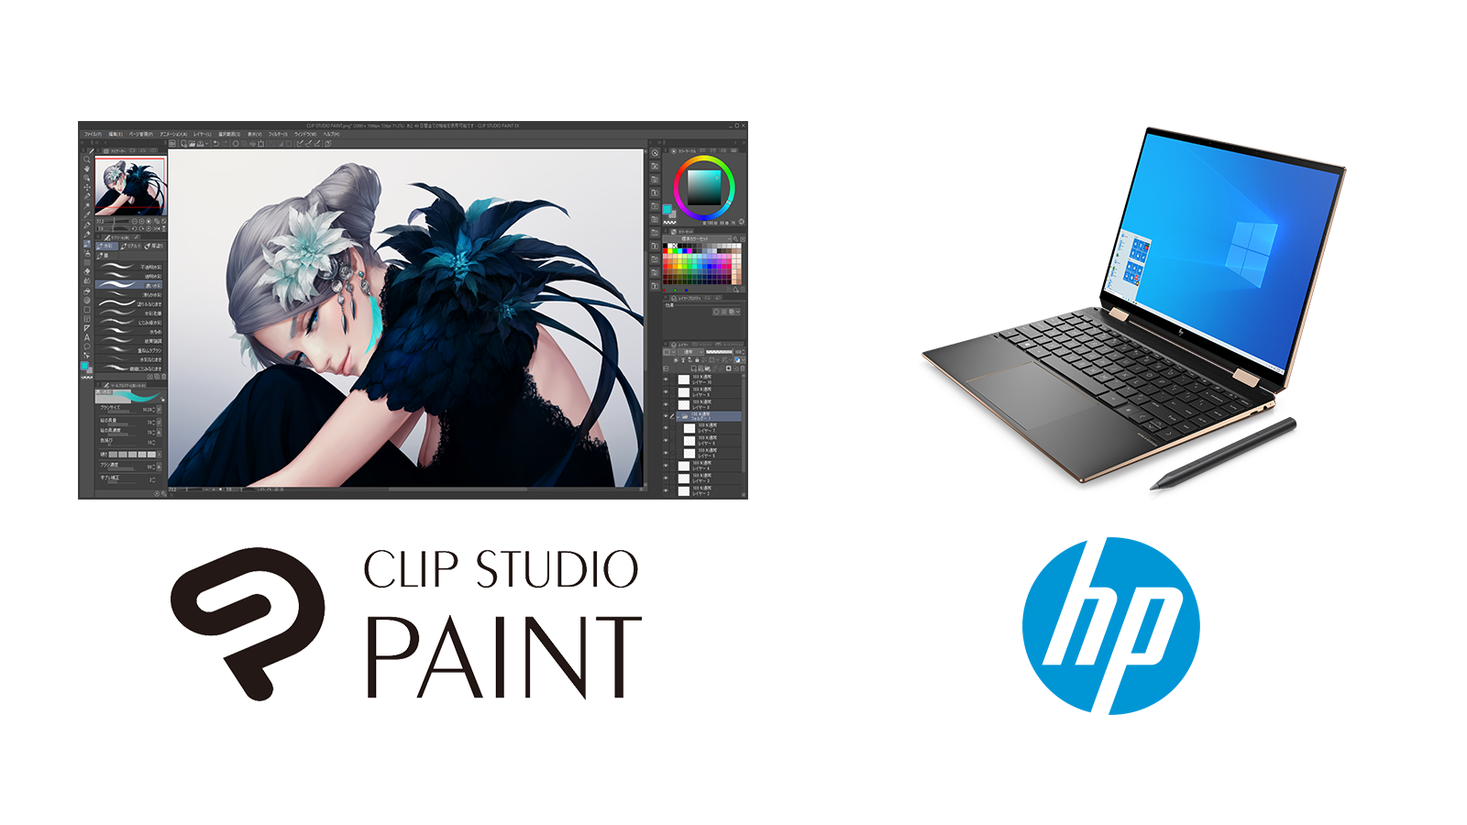 Clip Studio Paint が日本hpの新製品パソコンにバンドル 全9シリーズで採用 株式会社セルシスのプレスリリース